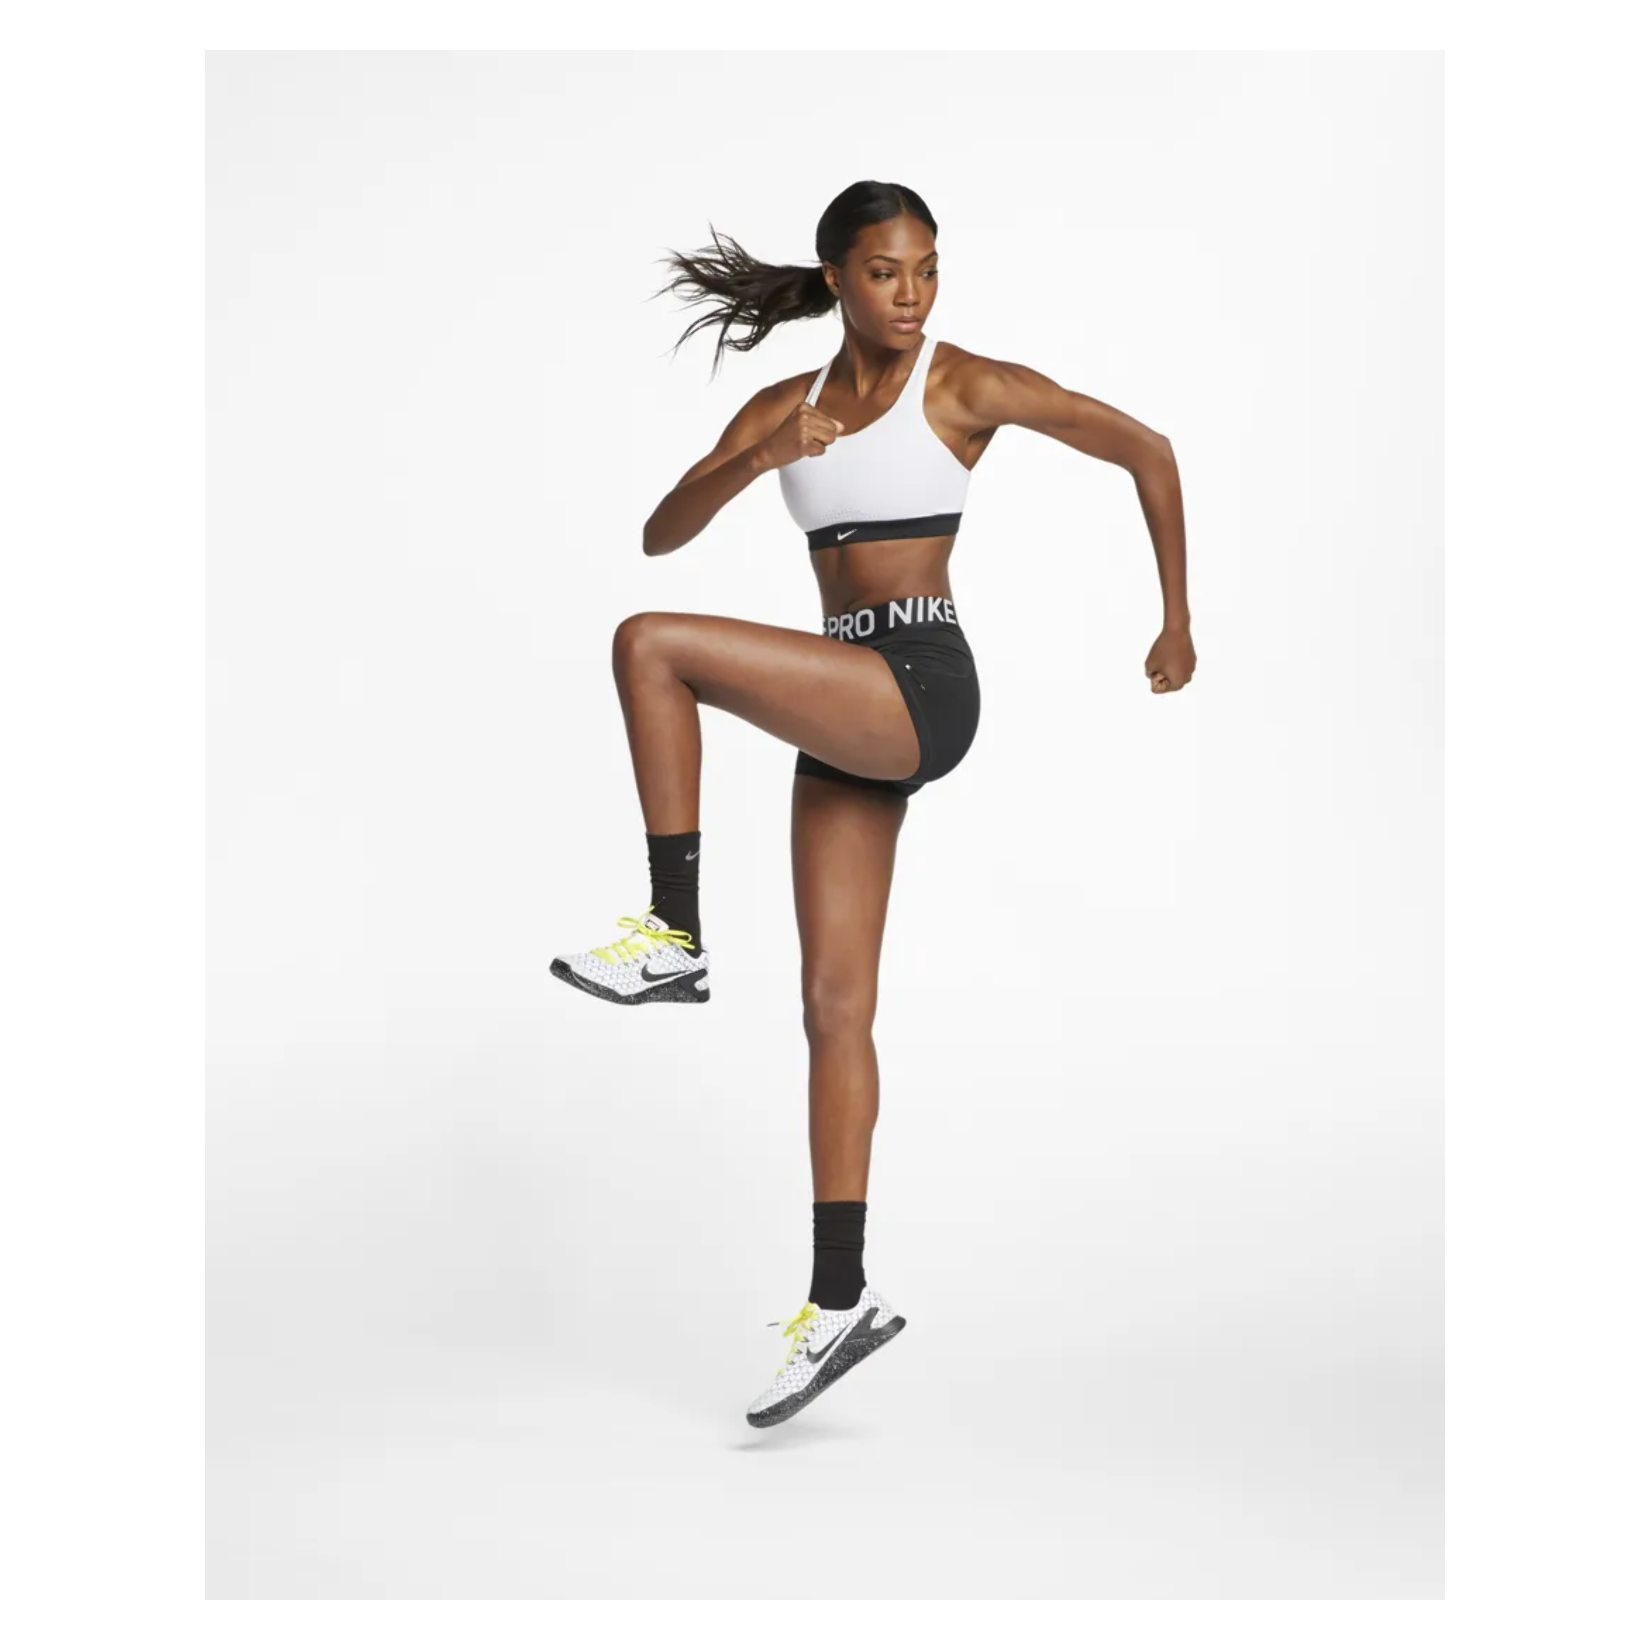 Nike Womens 3 Inch Pro Training Shorts